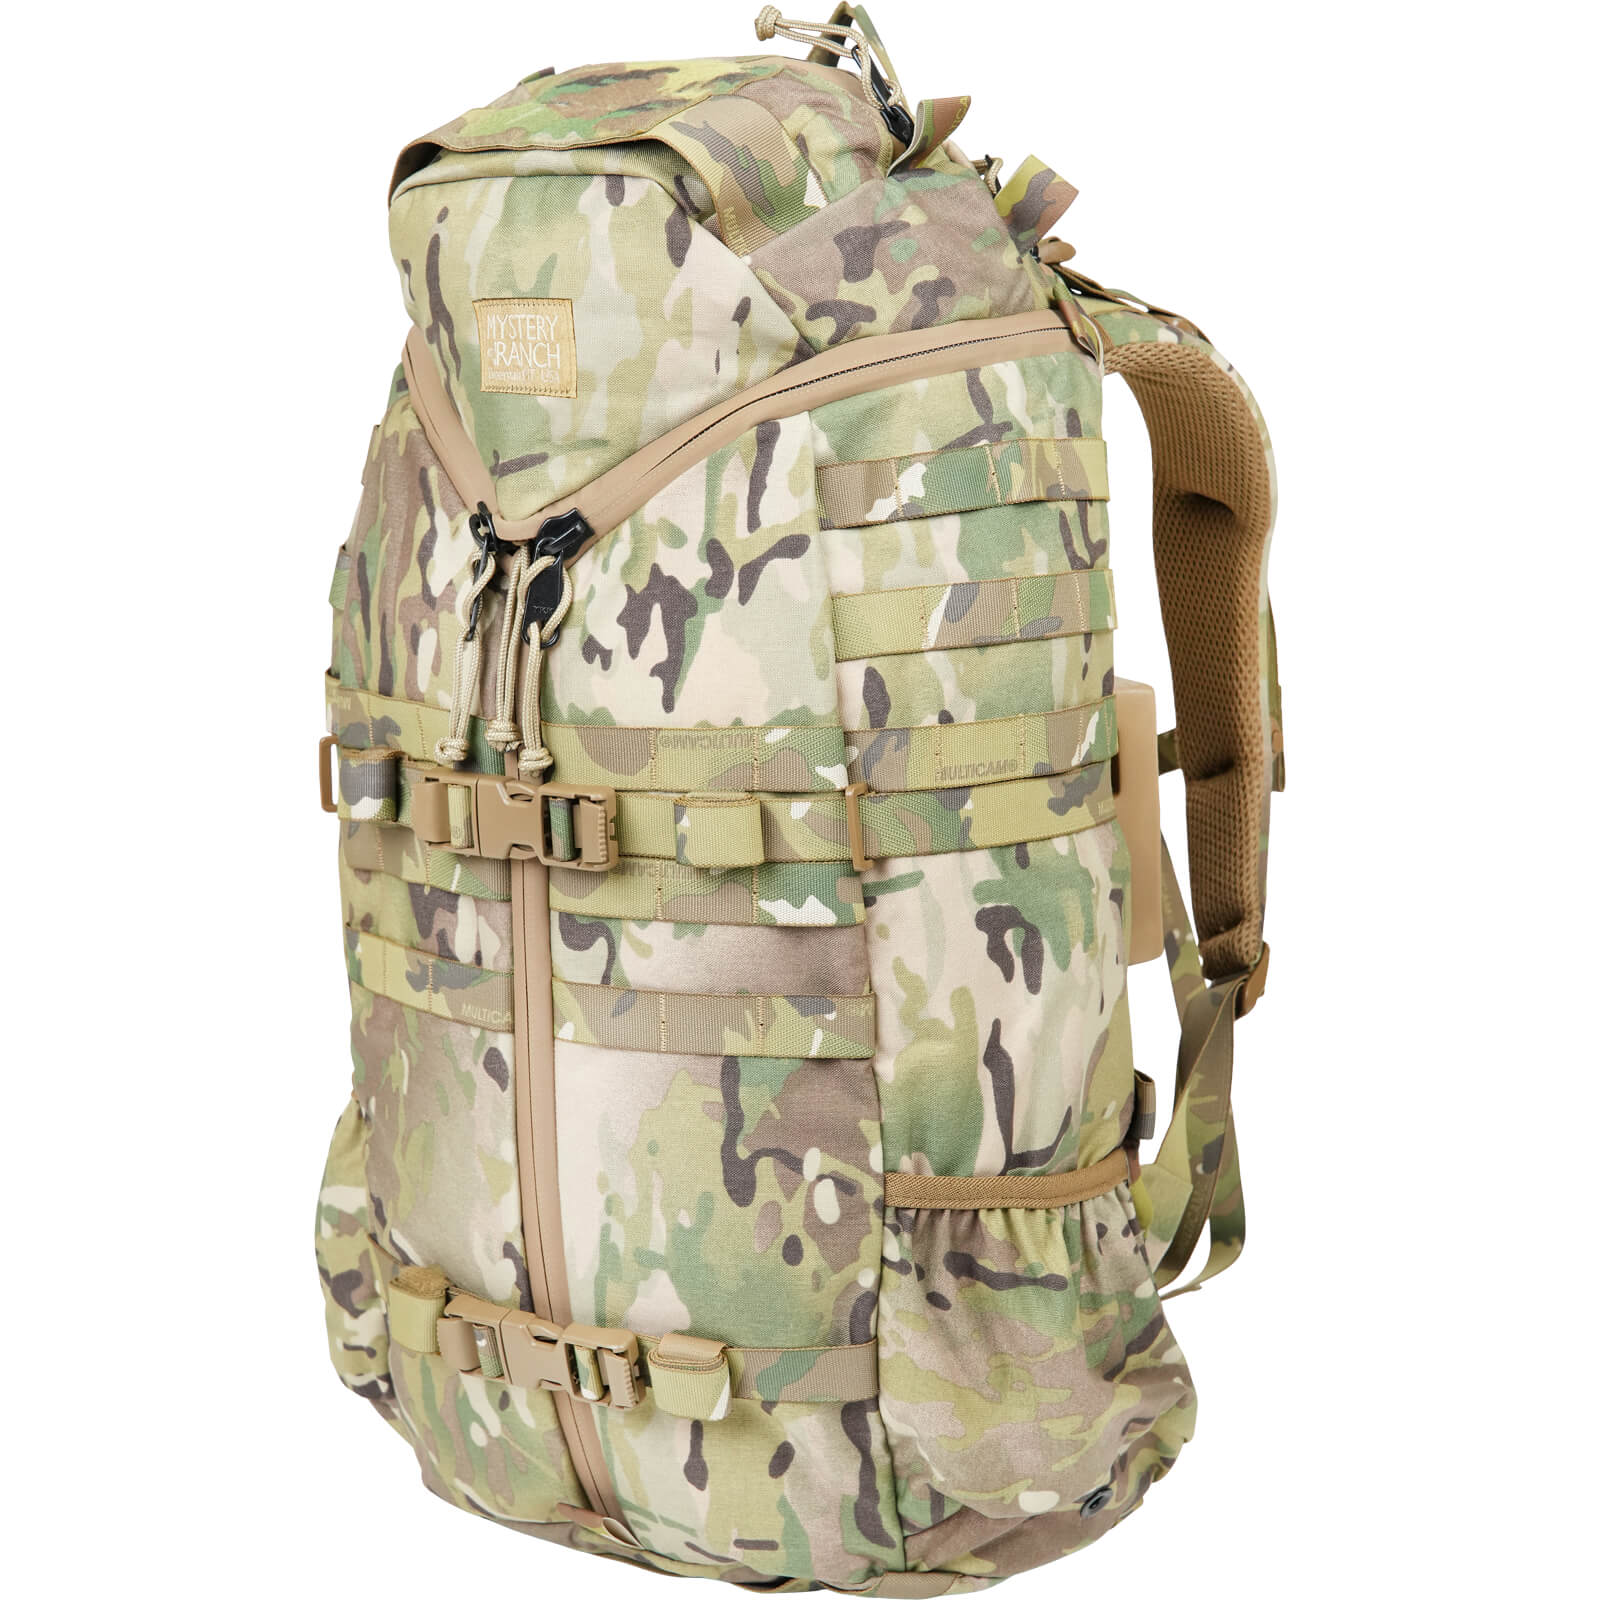 Komodo Dragon Pack  Most expensive backpack, Backpacks, Rucksack